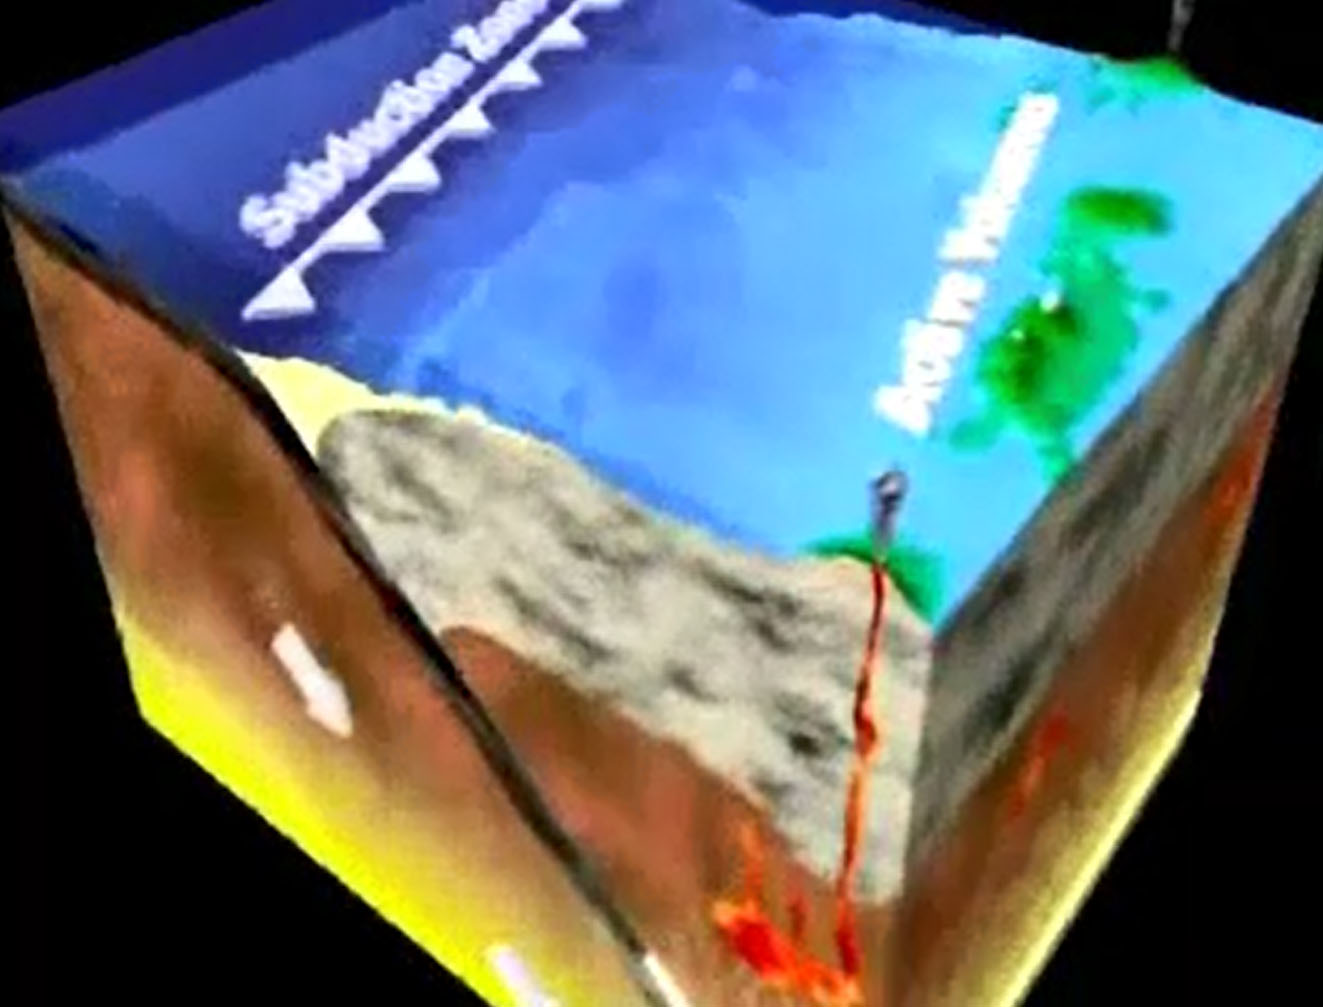 subduction zone animation